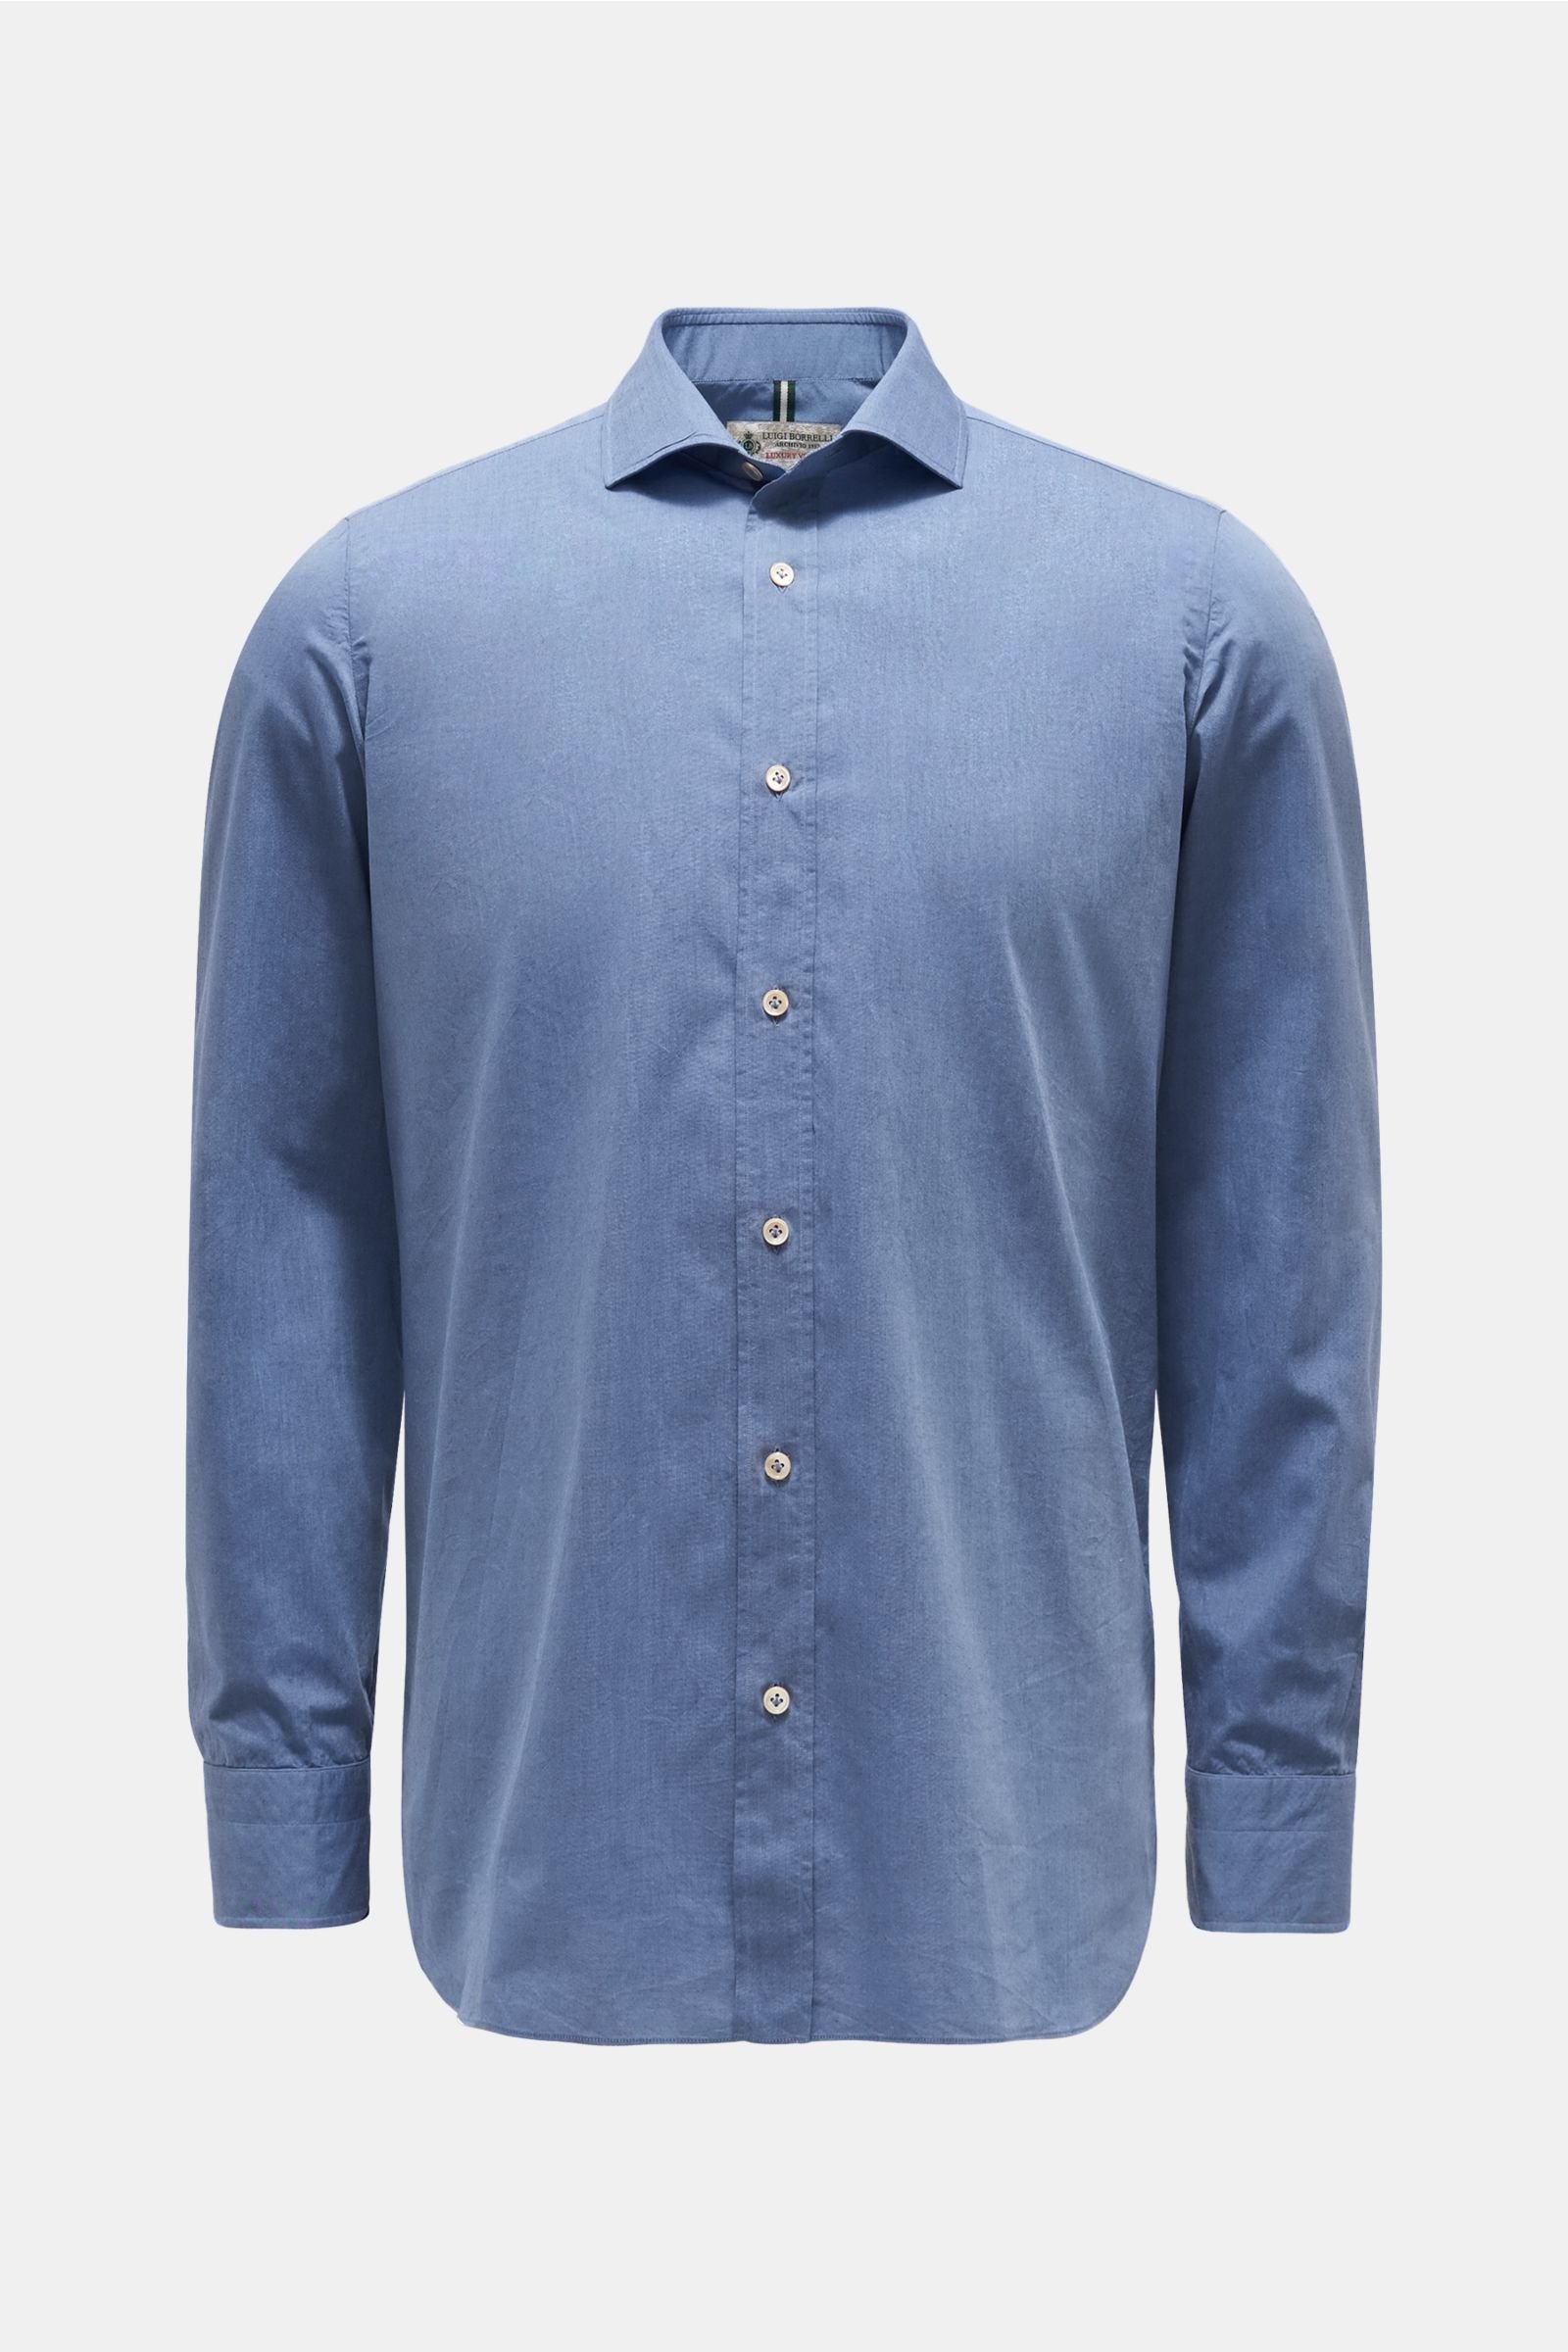 Chambray shirt slim collar grey-blue